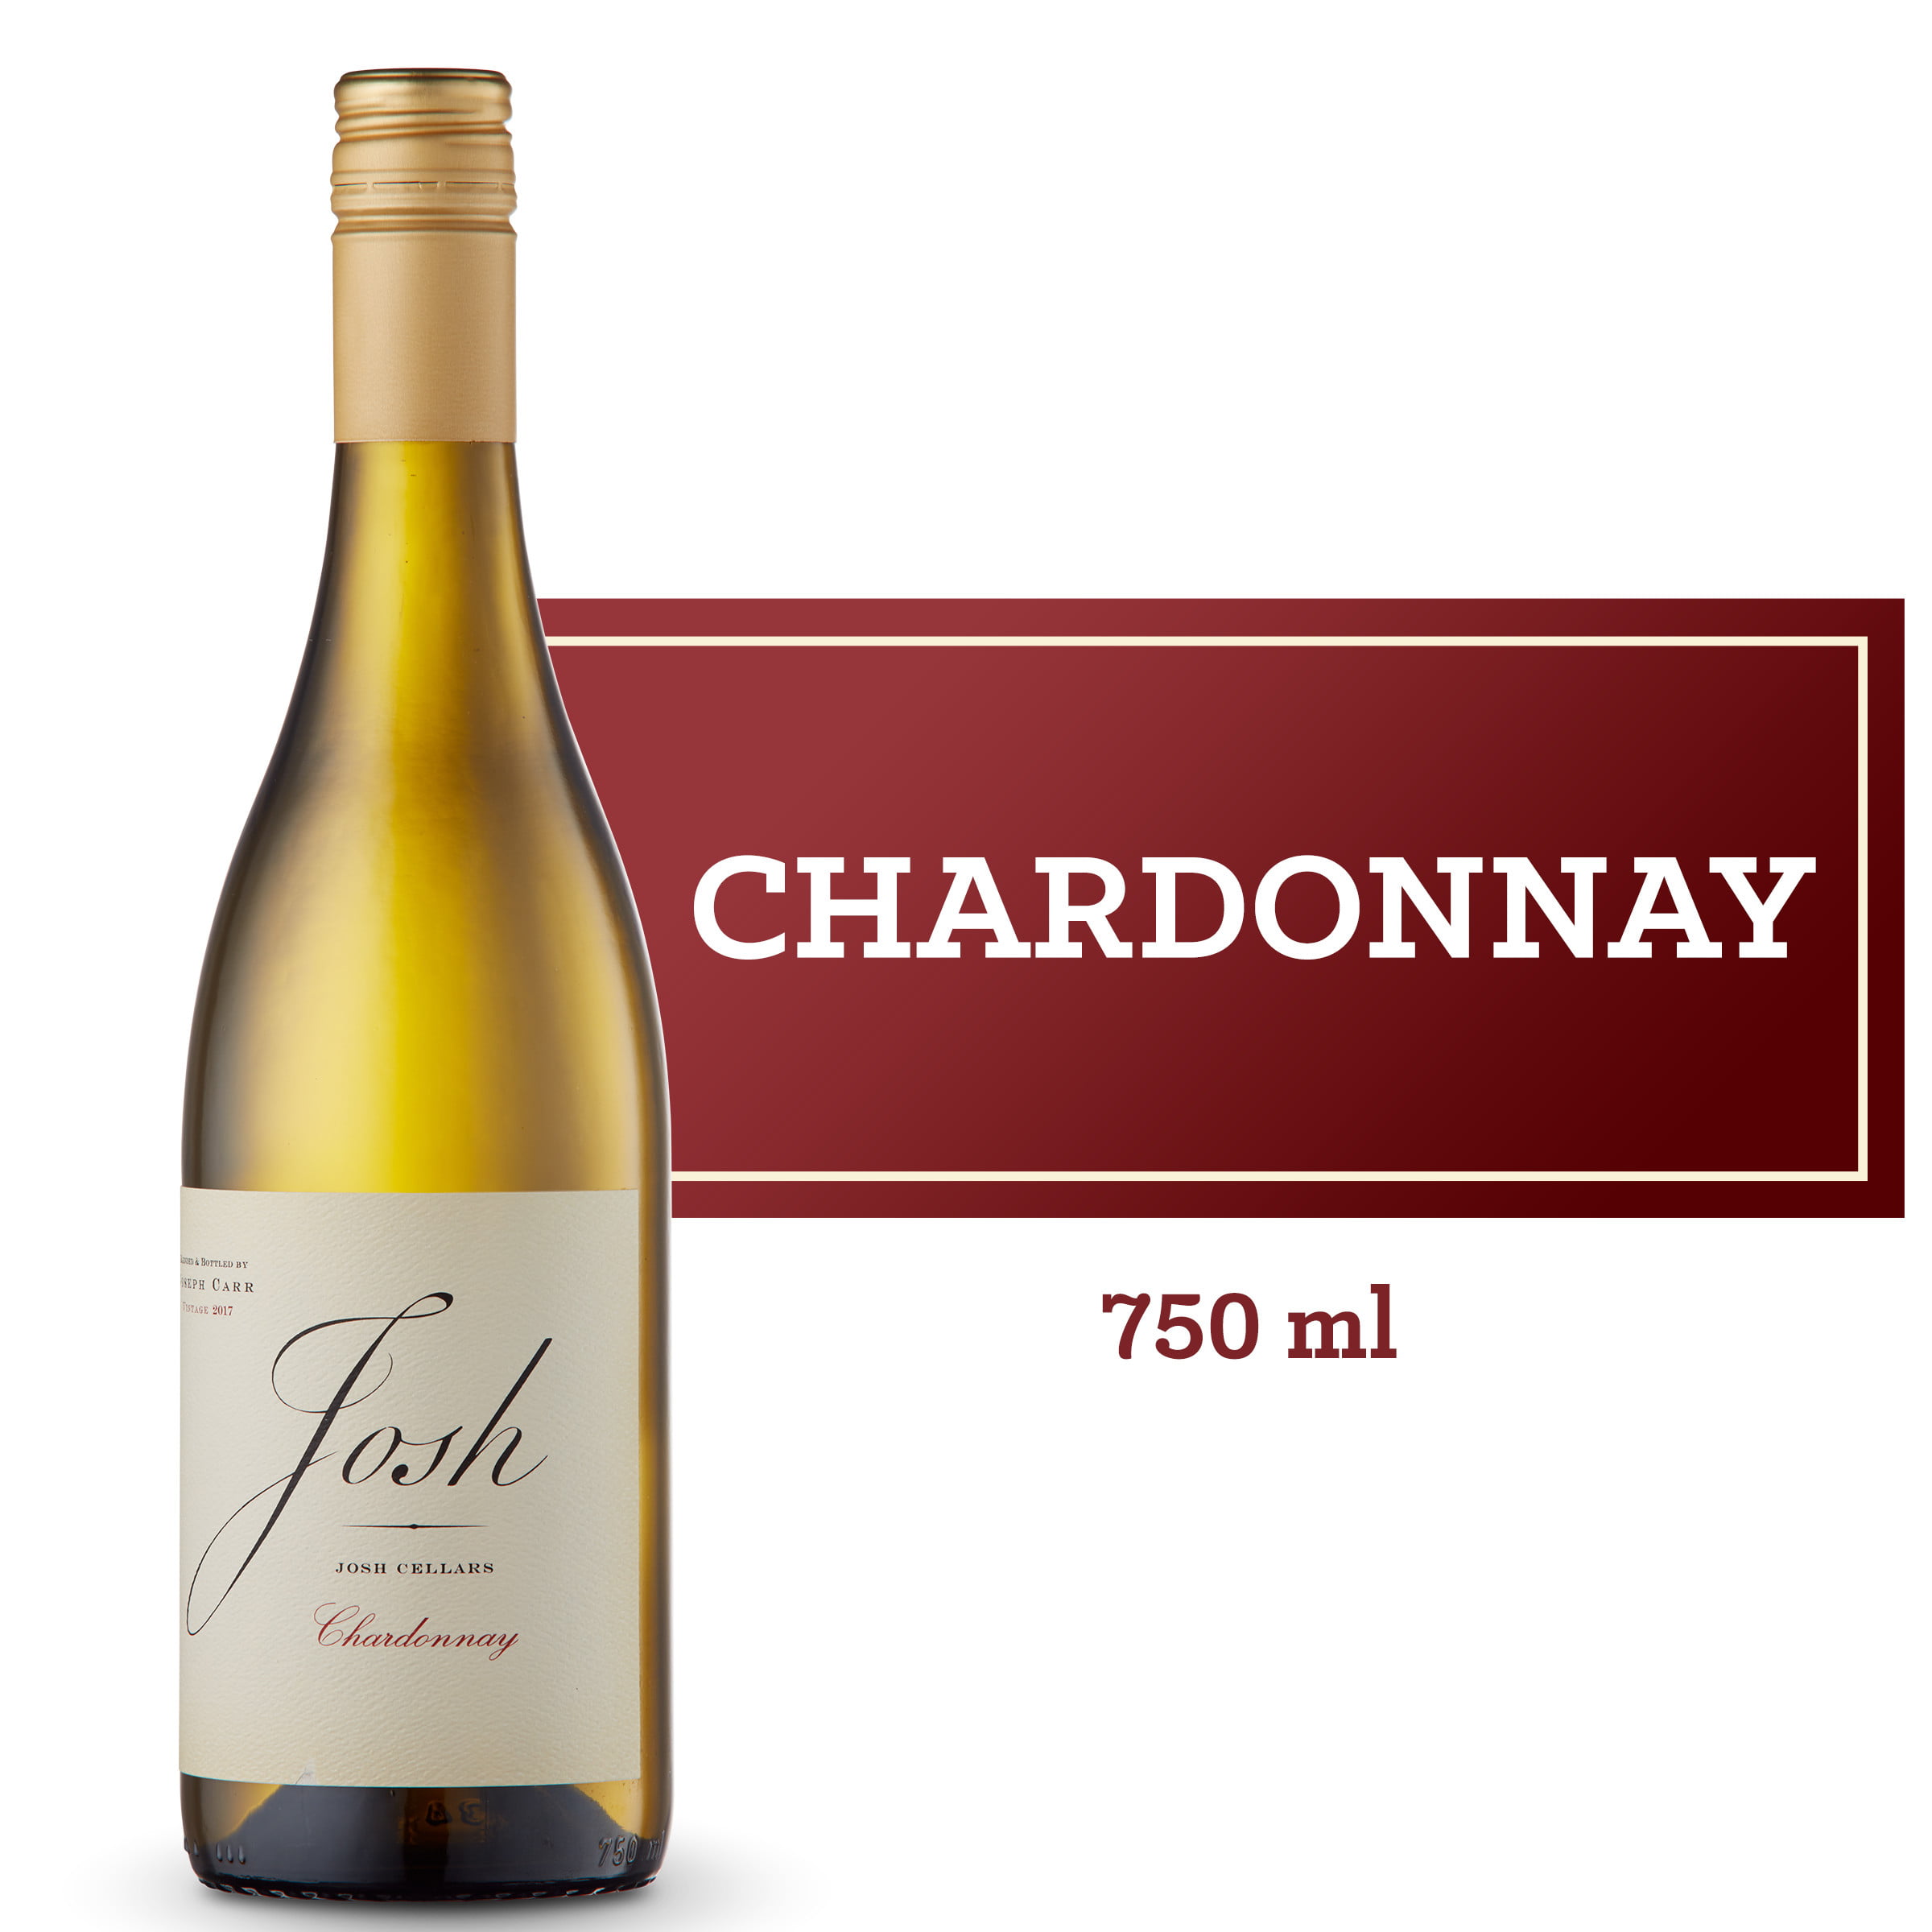 josh-cellars-chardonnay-wine-750ml-walmart